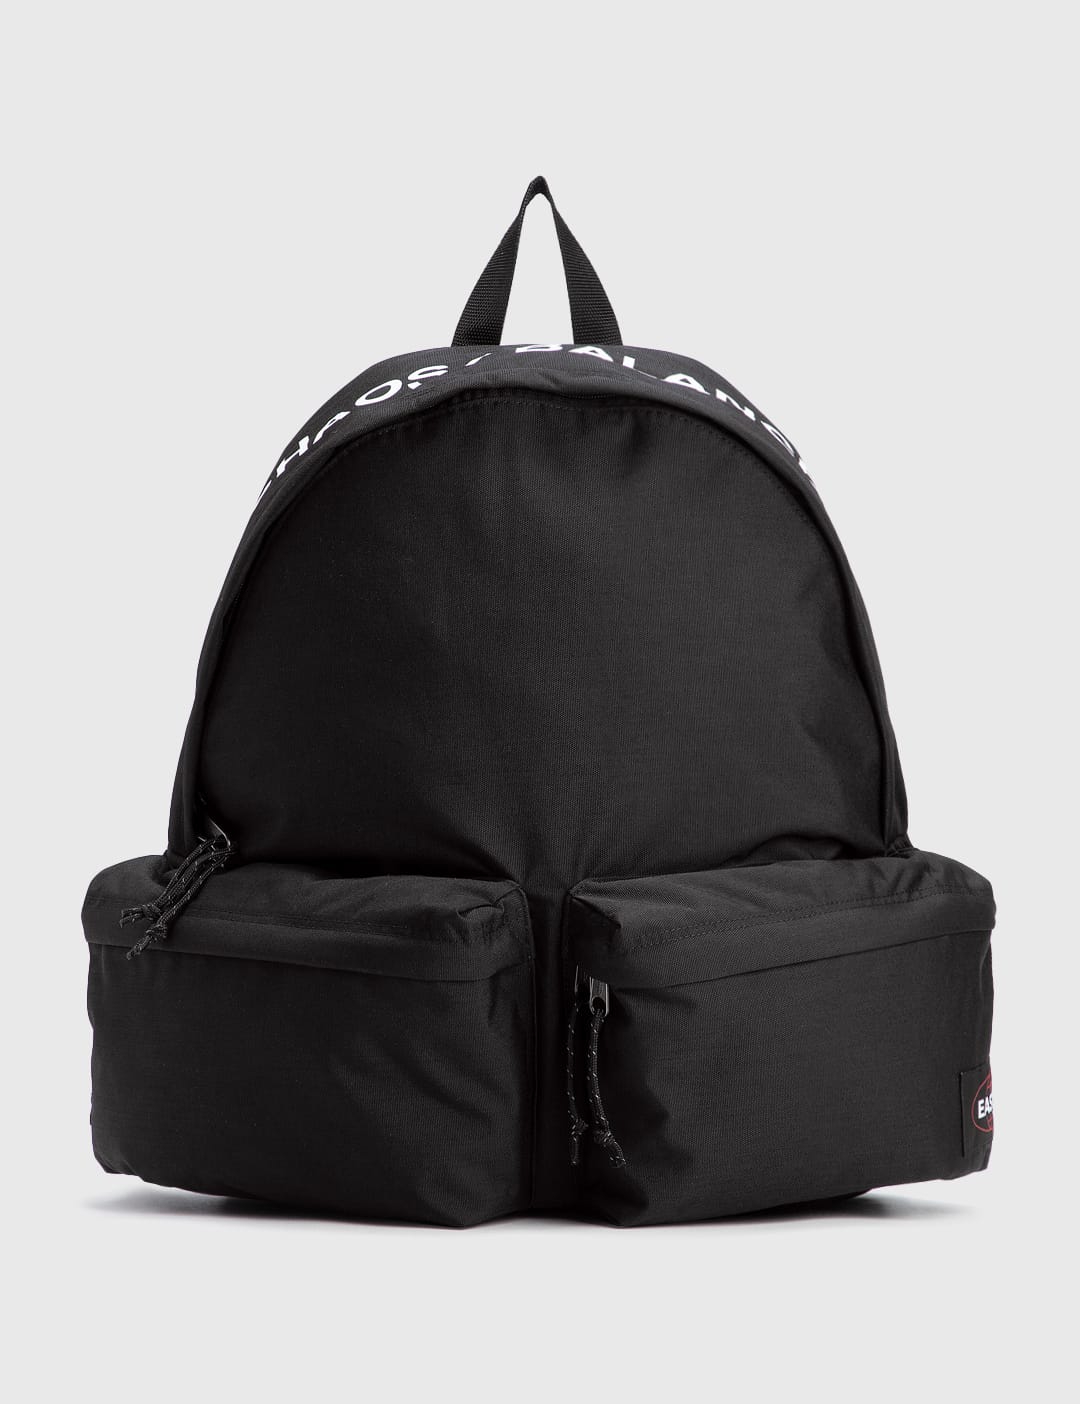 X EASTPAK DUFFEL BAG HBX Men Accessories Bags Travel Bags 